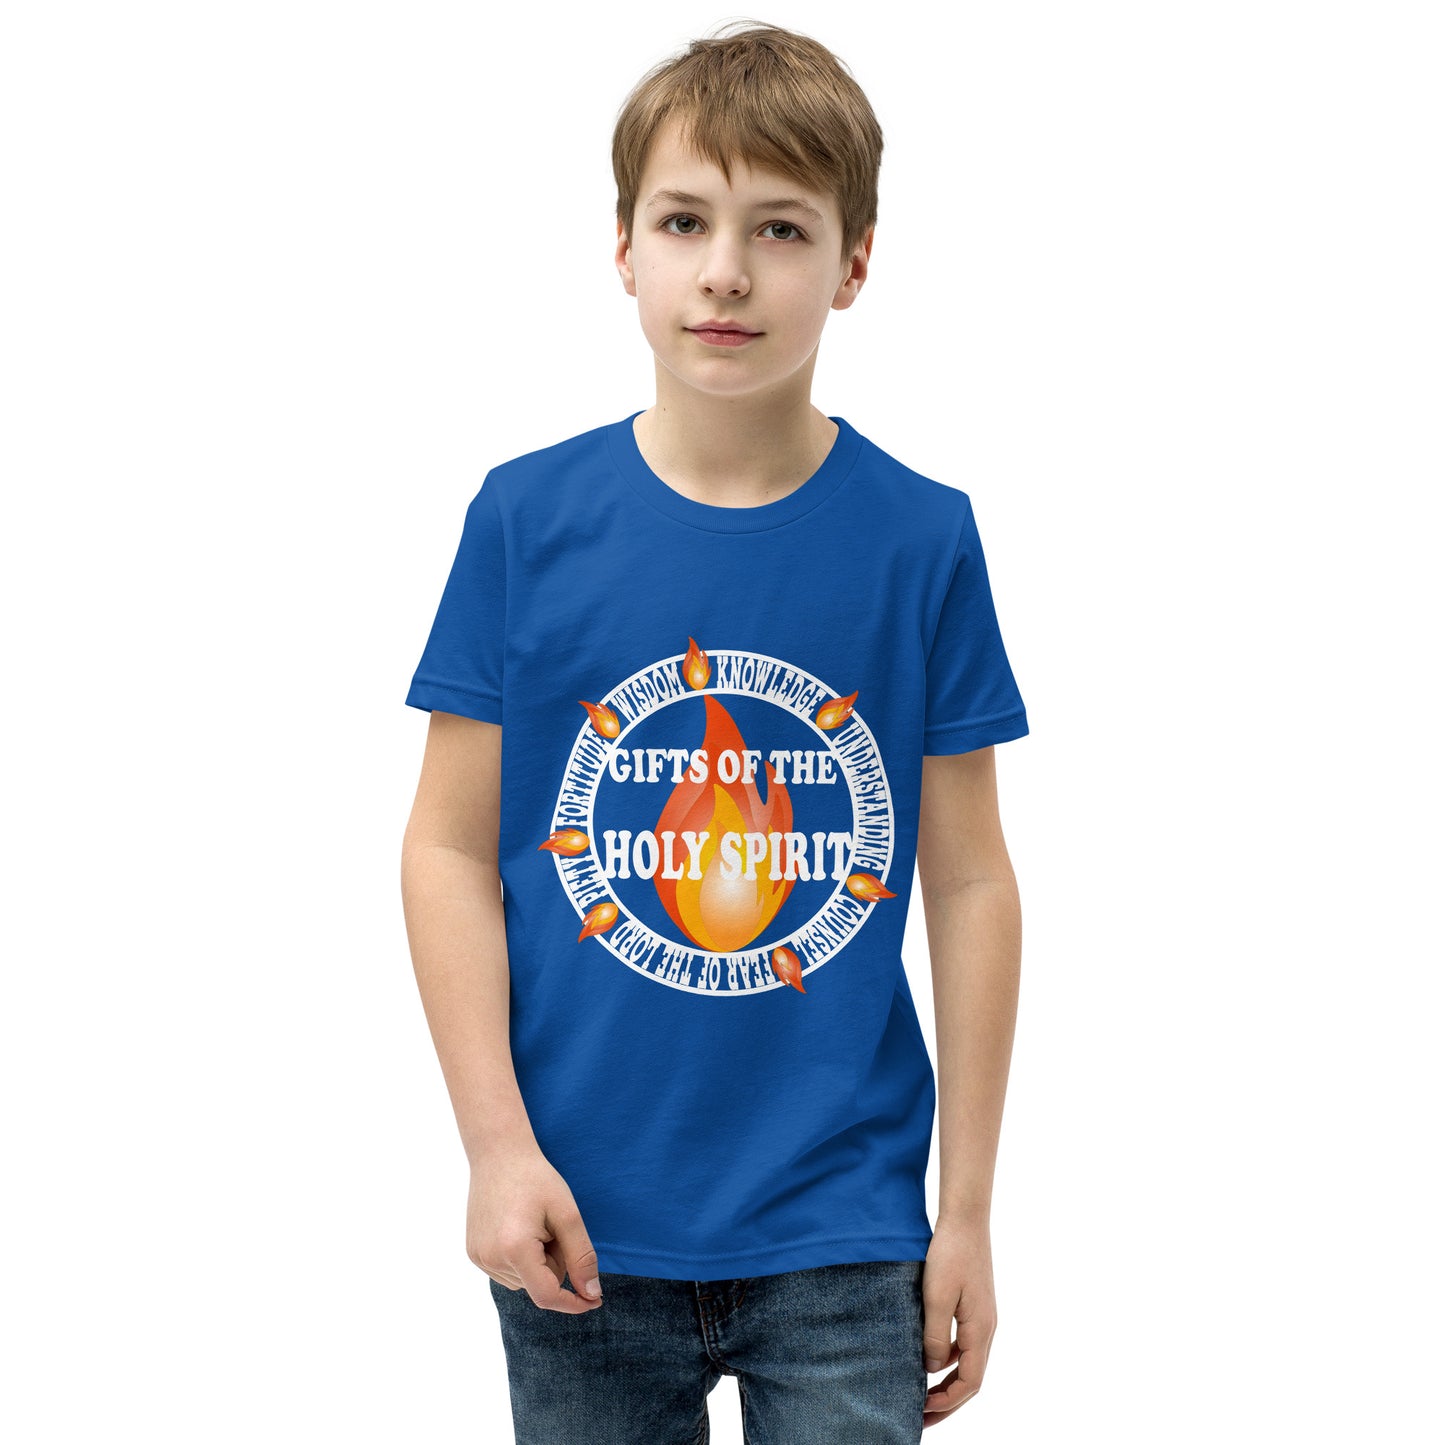 Gifts of the Holy Spirit Children's Christian t-Shirt